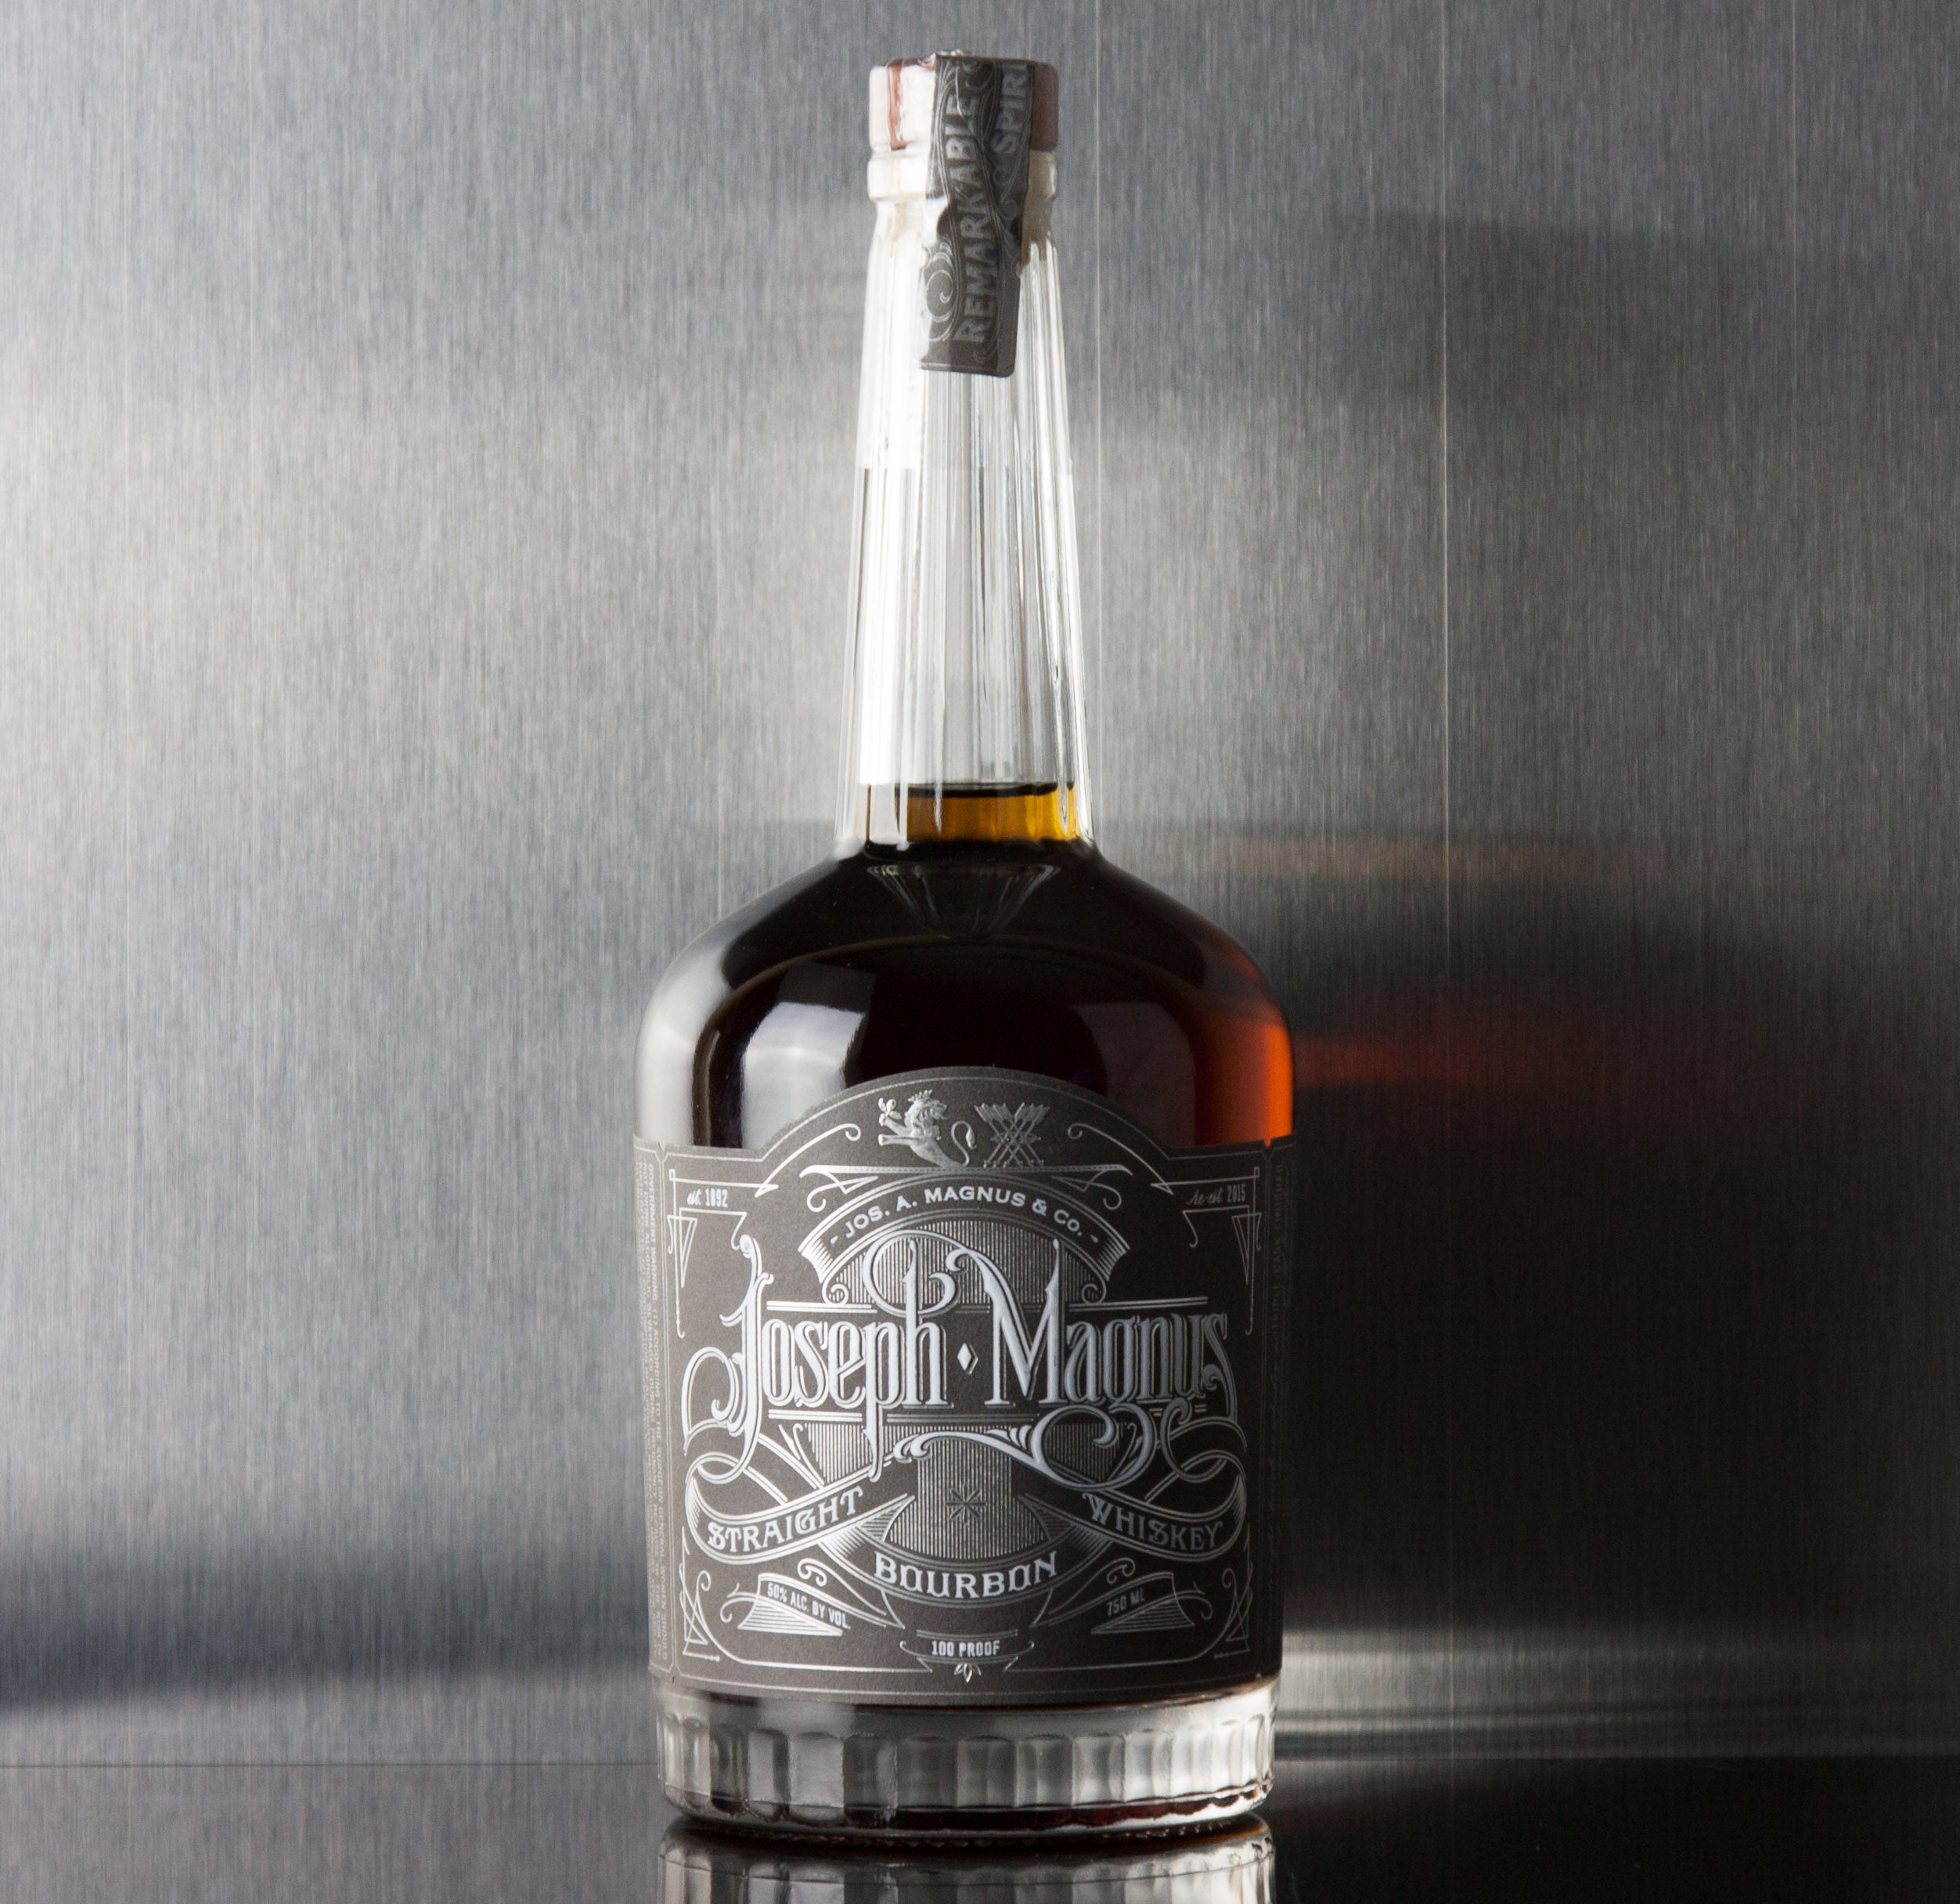 Joseph Magnus Straight Bourbon Whiskey 750 ml